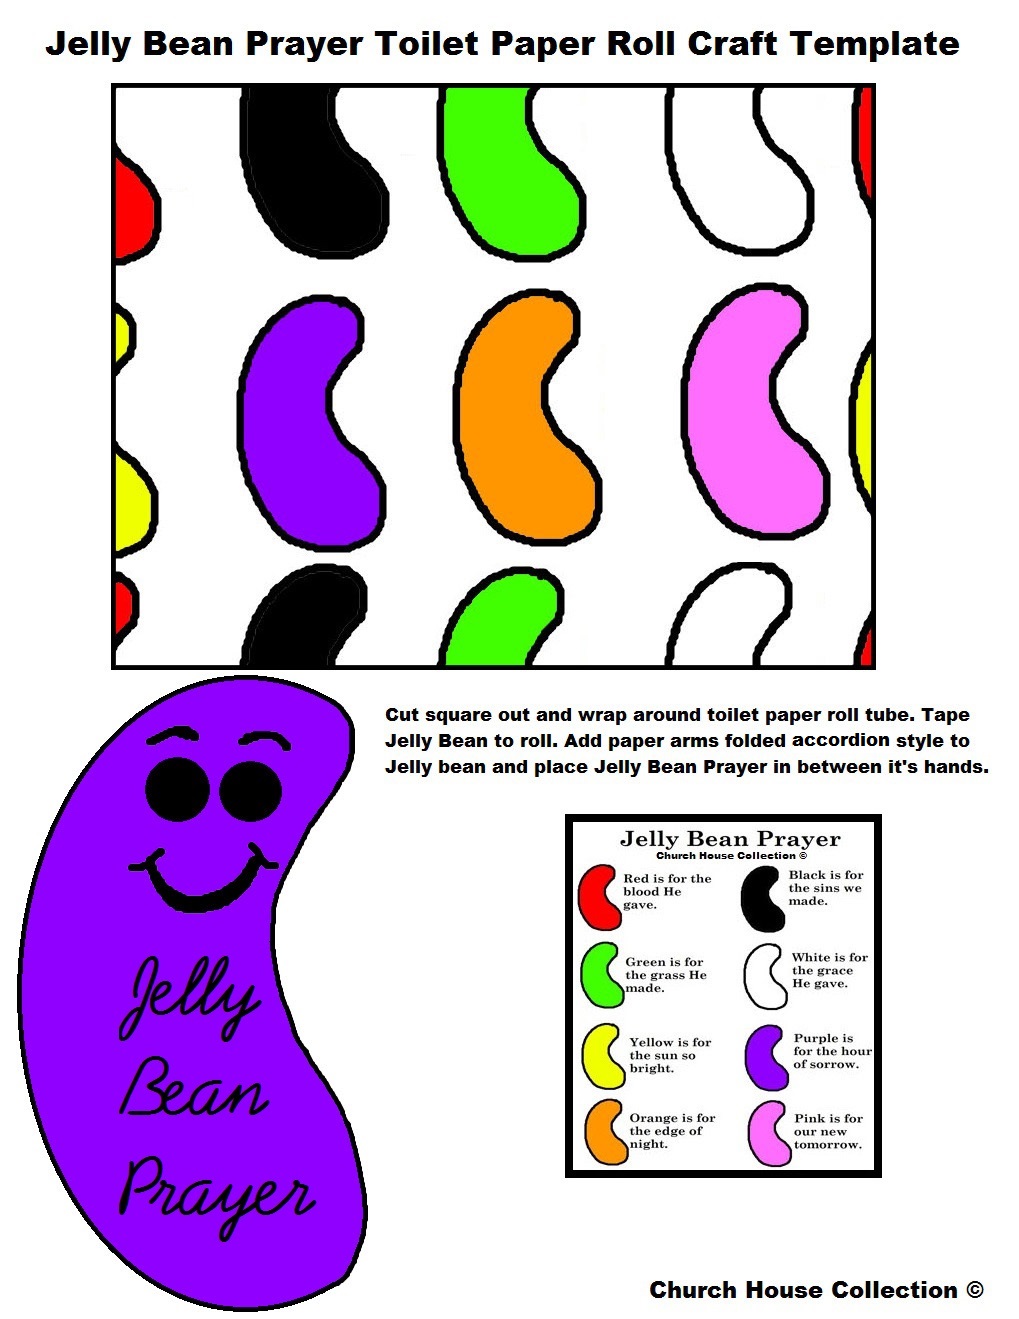 Colored Jelly Bean Prayer Template printable version